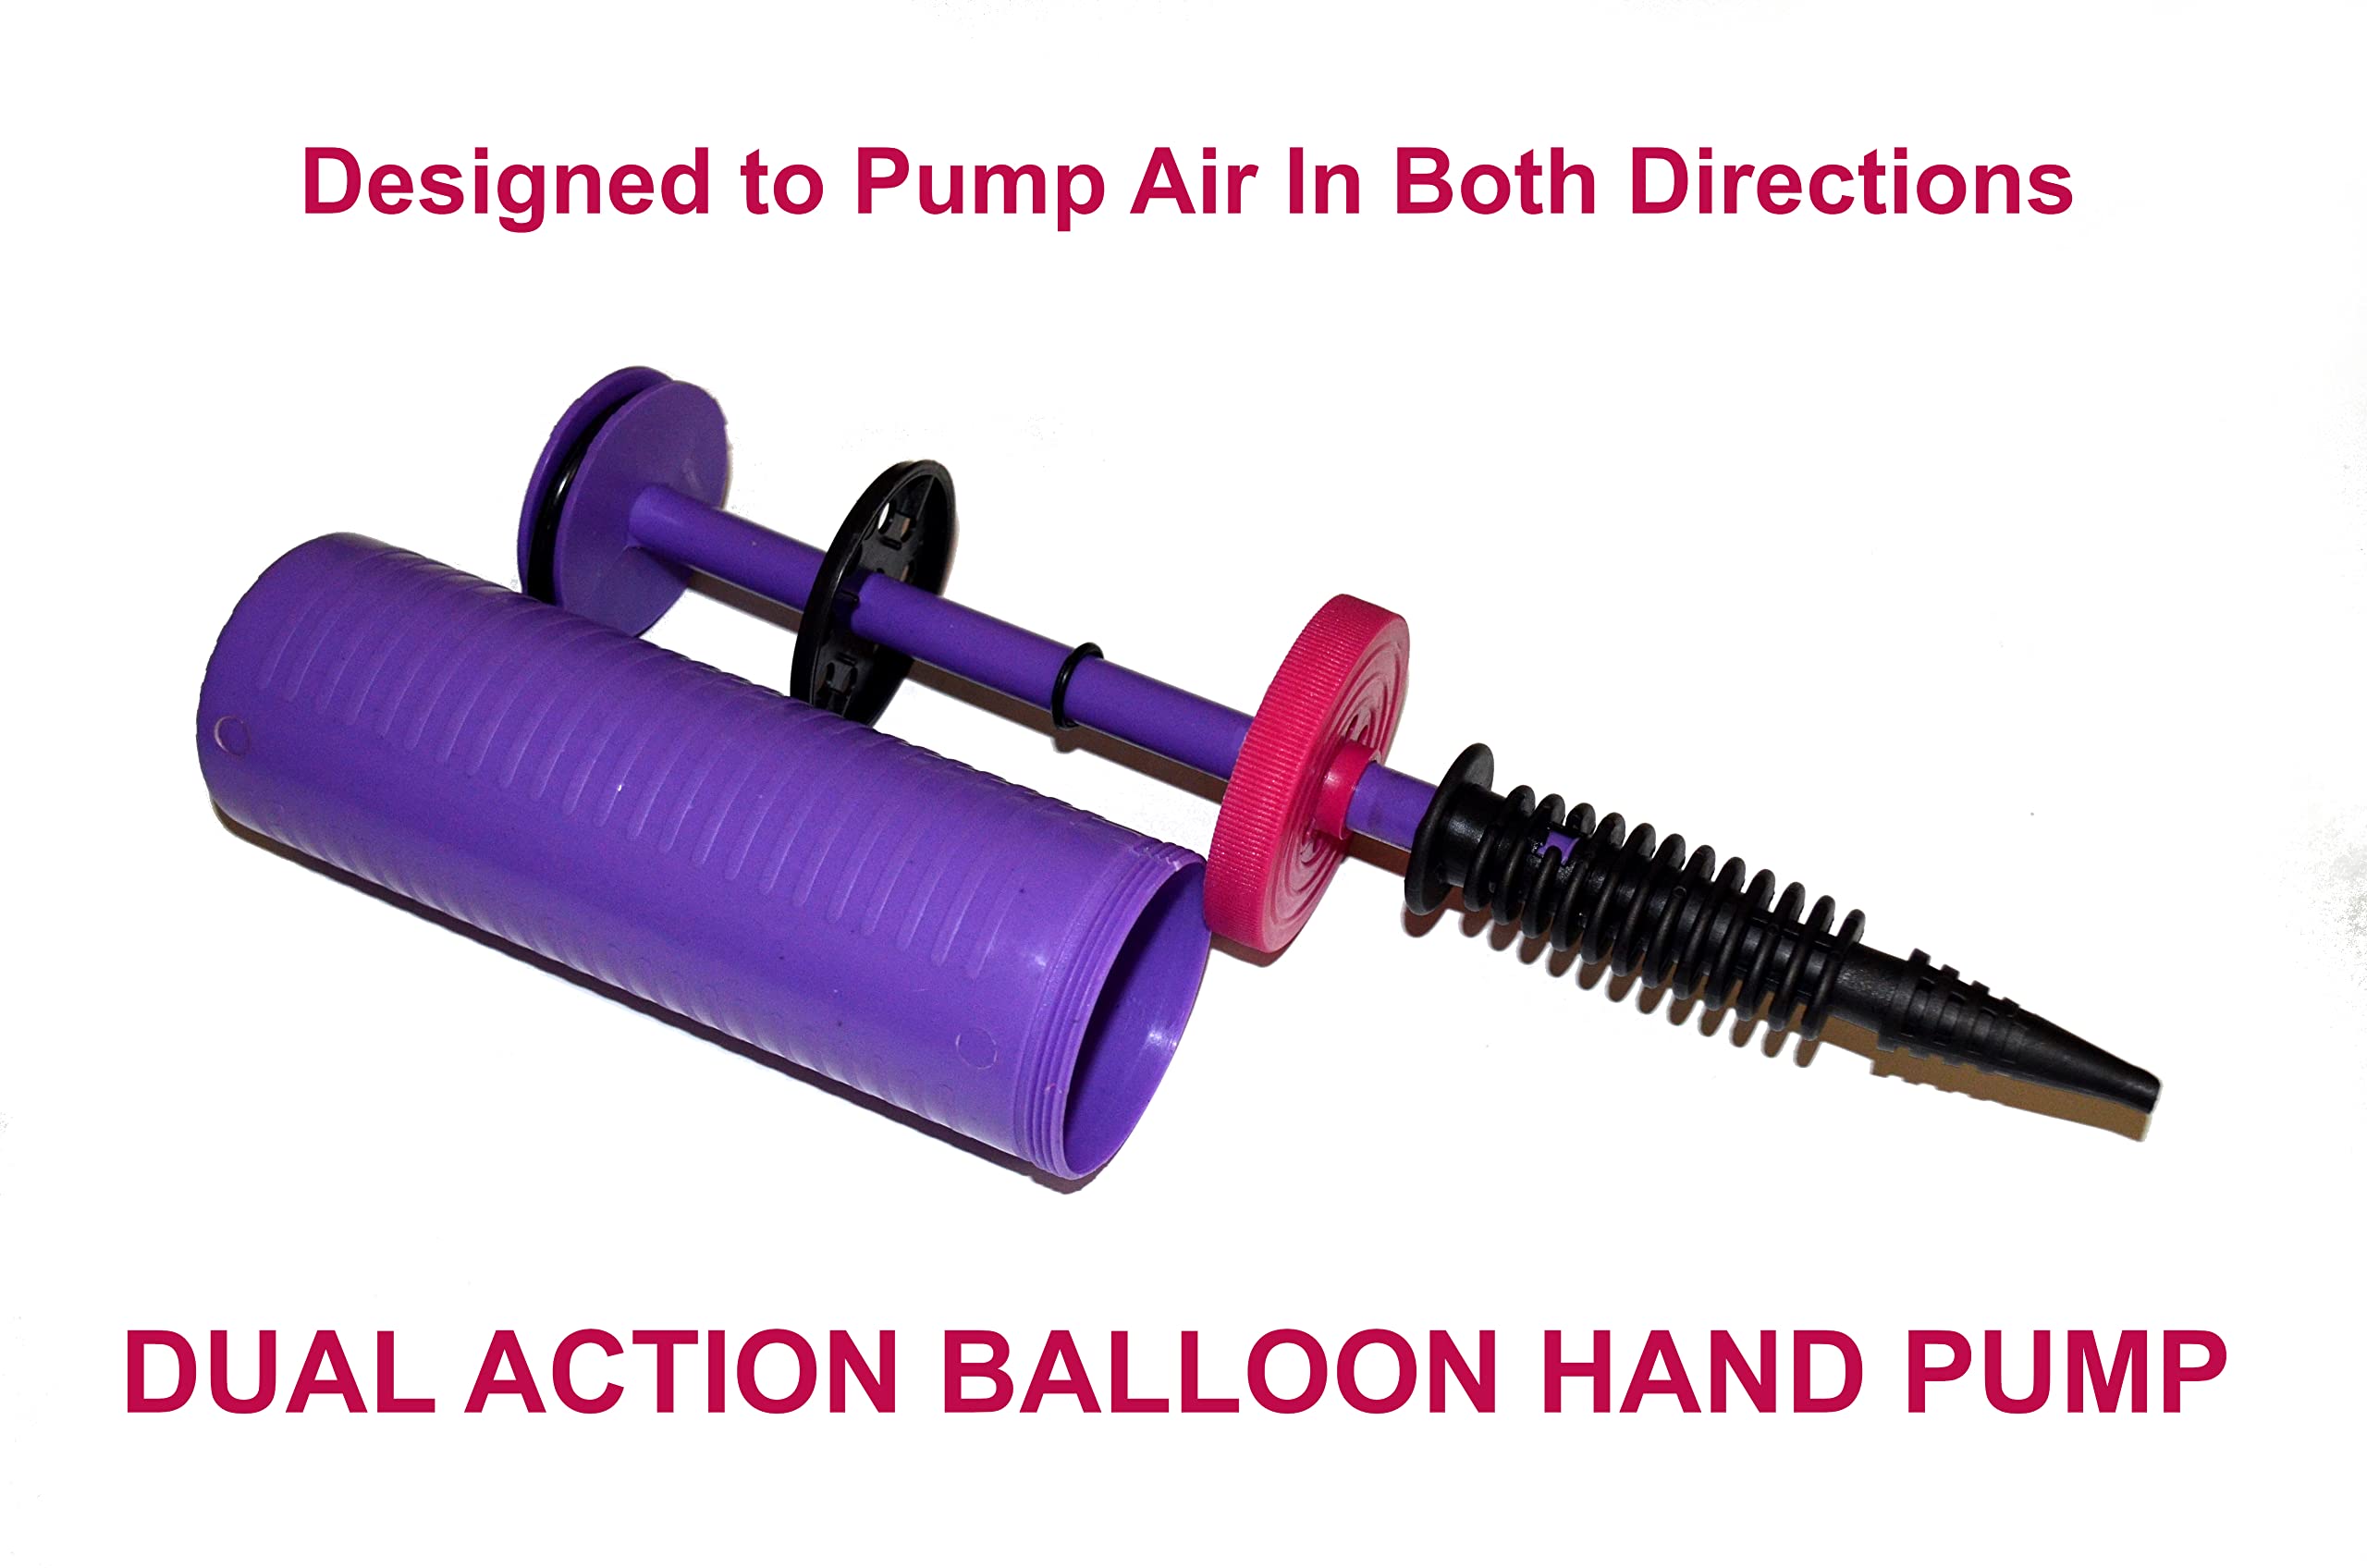 Tota Hand Held 2-Way Dual Action Balloon Pump for Balloons